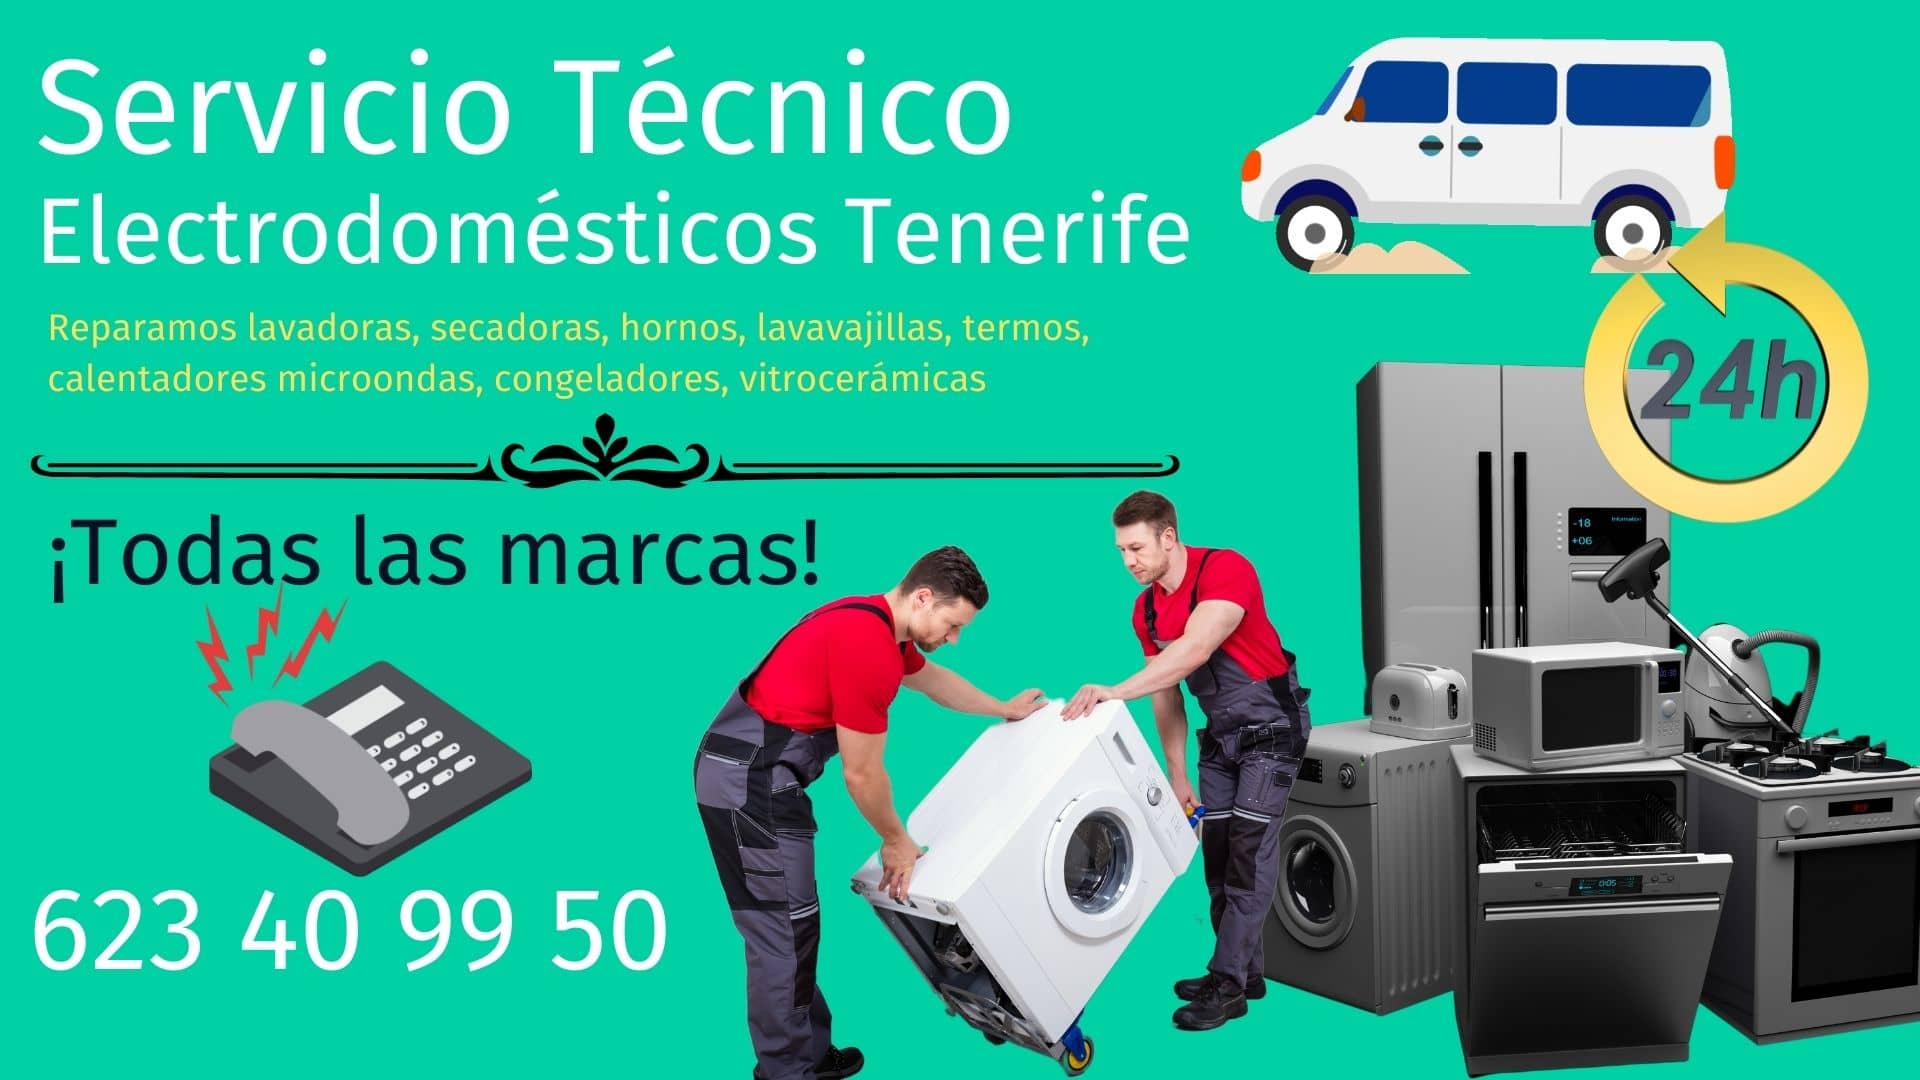 Servicio técnico Horeca Tenerife, servicio técnico tegran tenerife